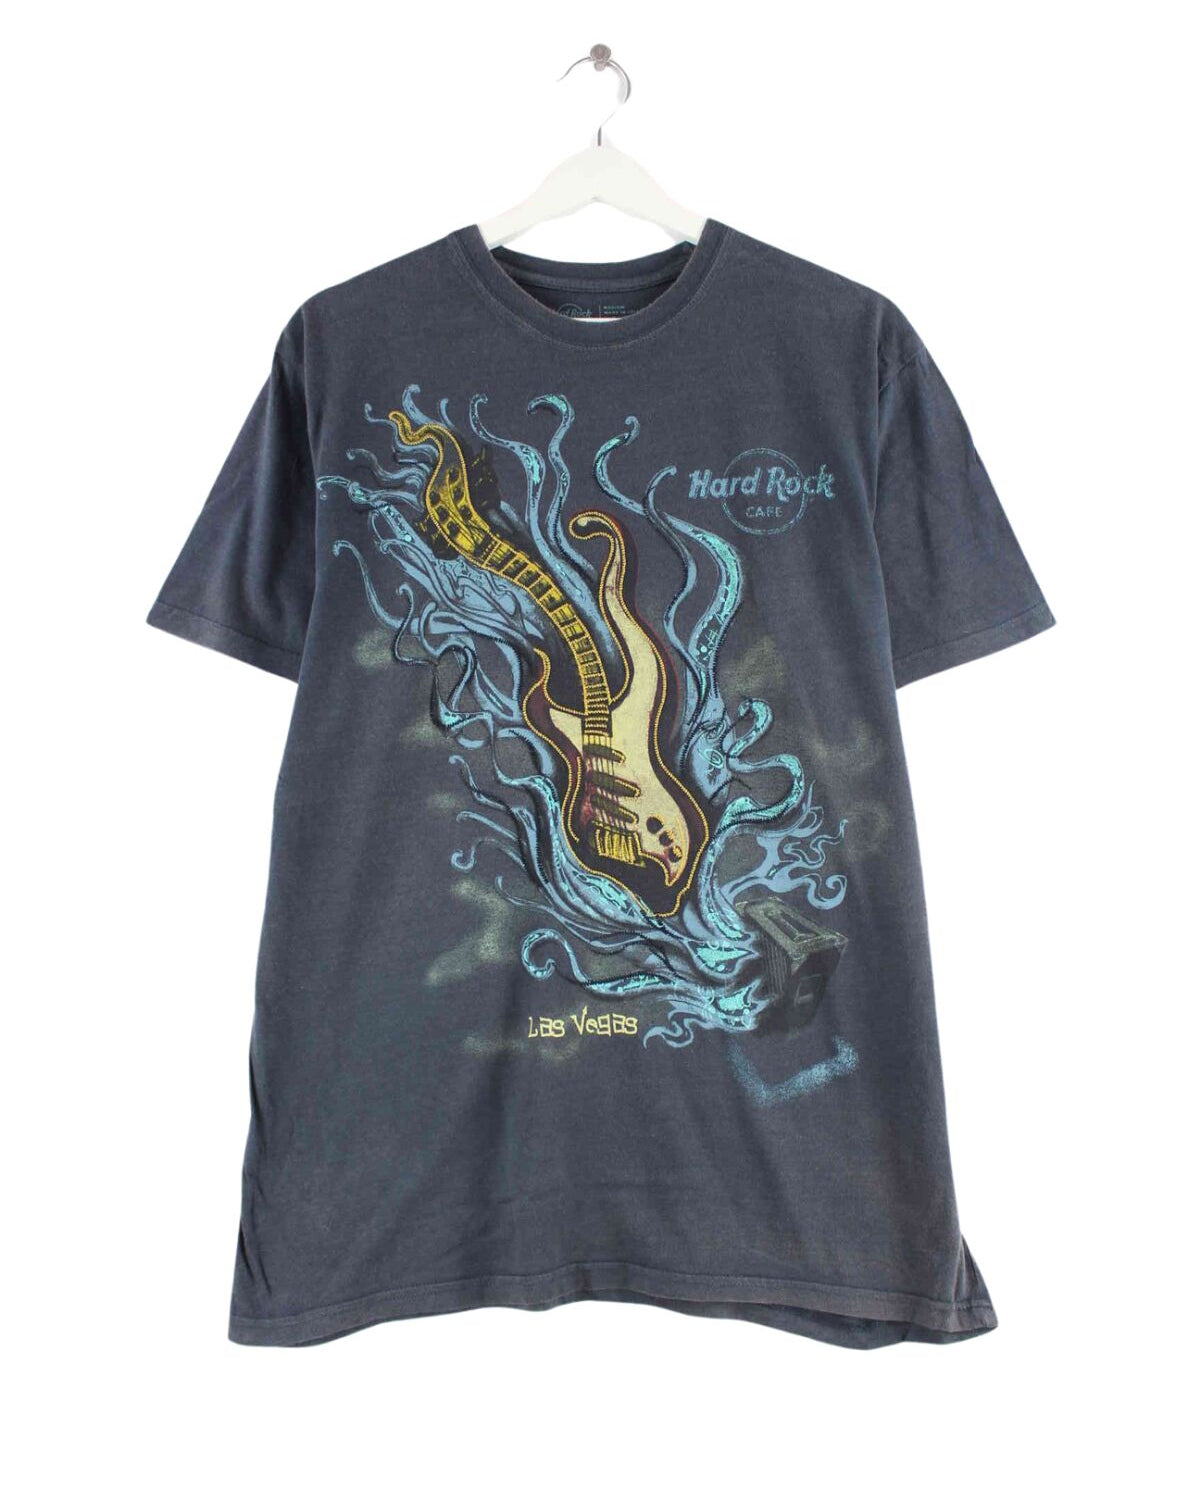 Hard Rock Cafe Las Vegas Embroidered Print T-Shirt Grau M (front image)